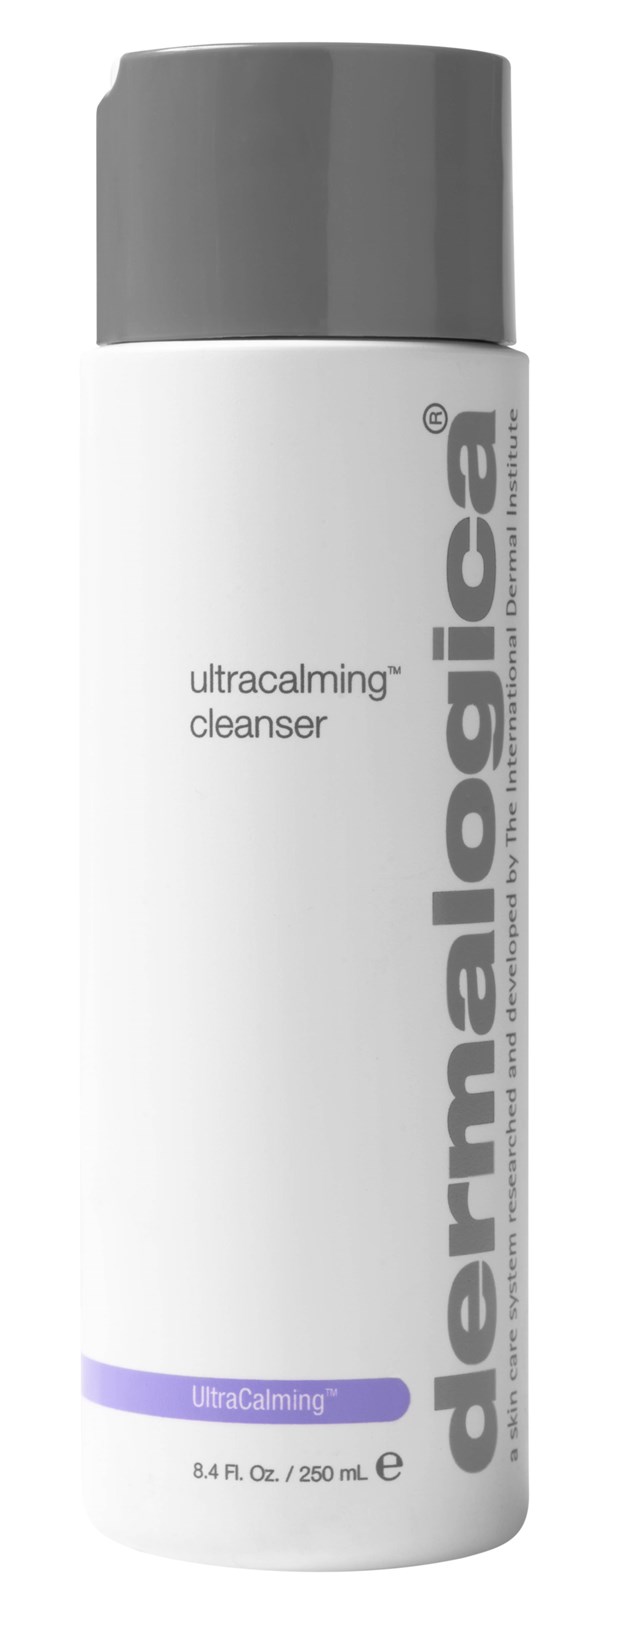 Ultra Calming Ultracalming Cleanser